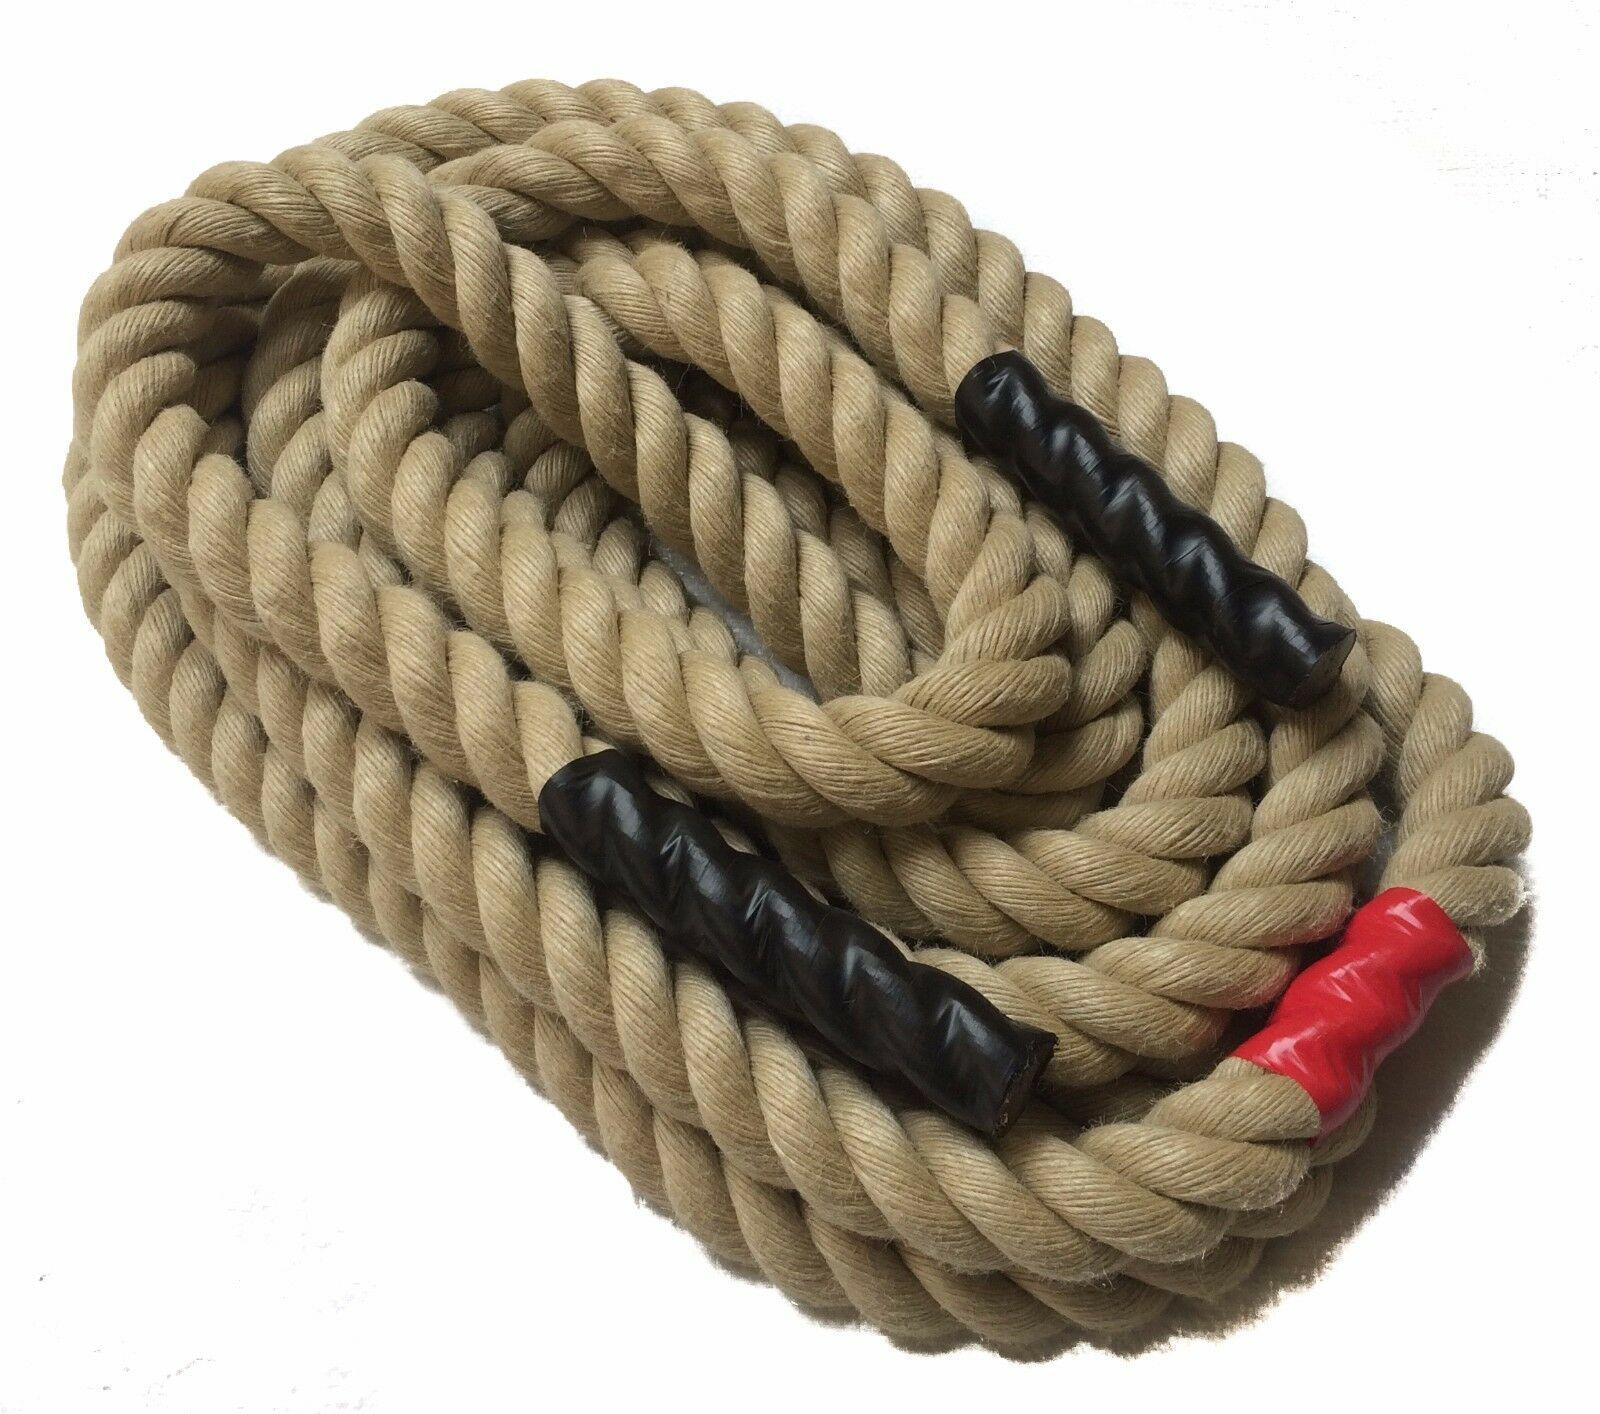 Tug of War Rope 24mm - Assassin Goods